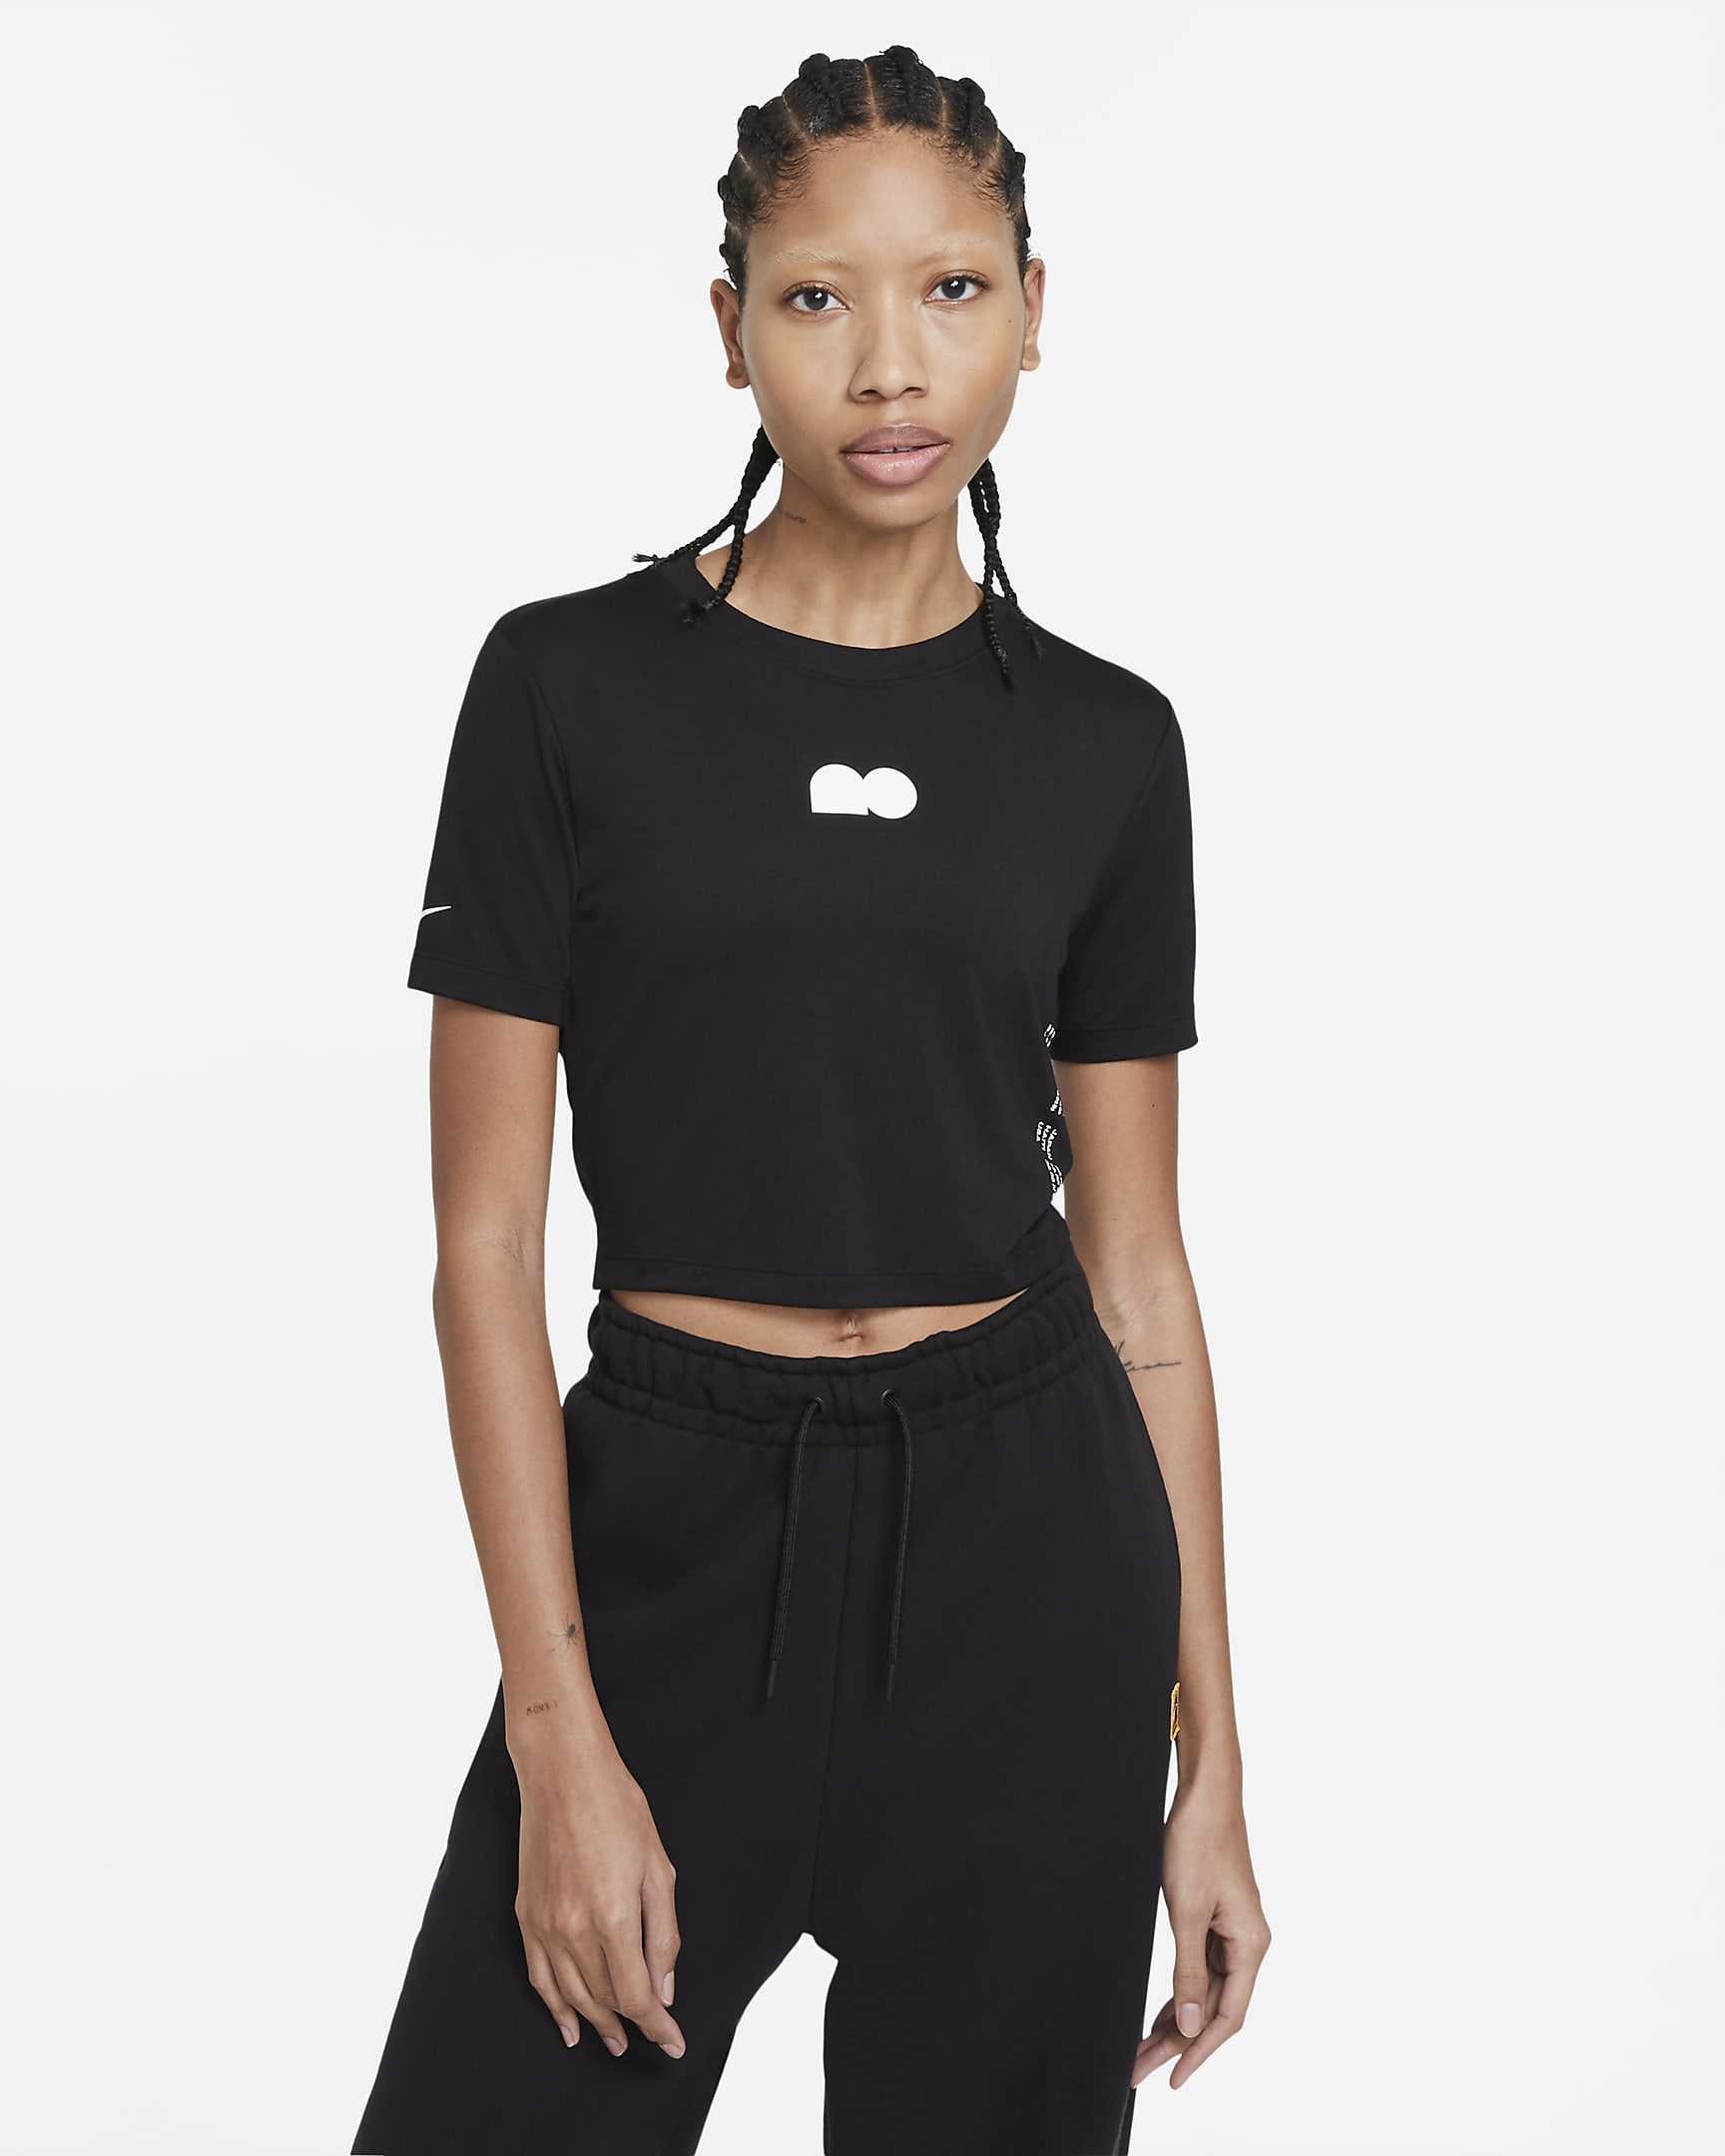 Naomi Osaka Cropped Tennis T-Shirt. Nike CH